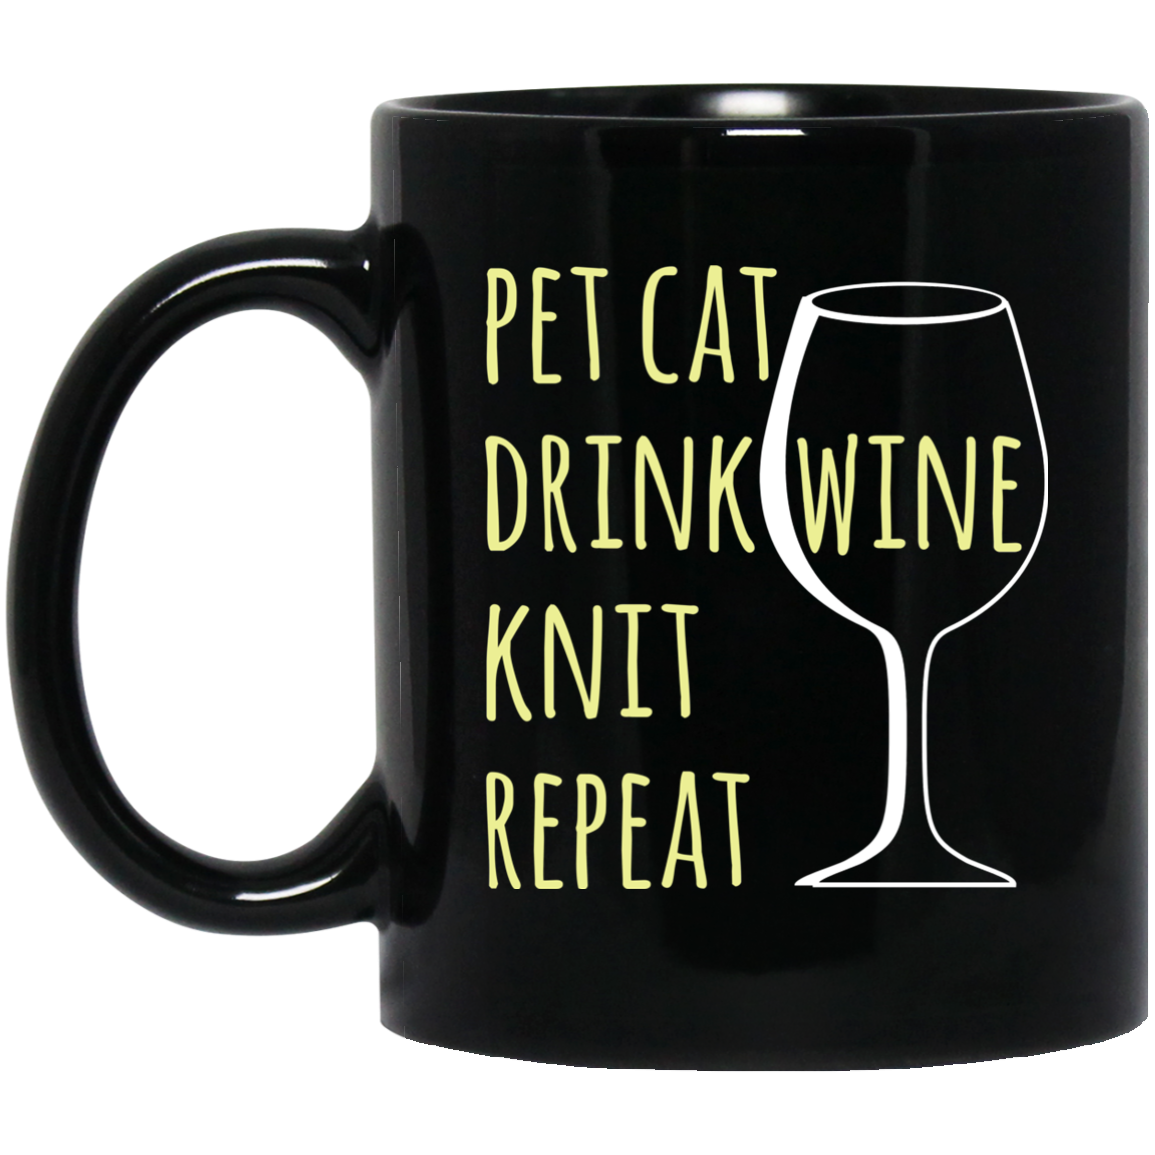 Pet Cat-Drink Wine-Knit Black Mugs